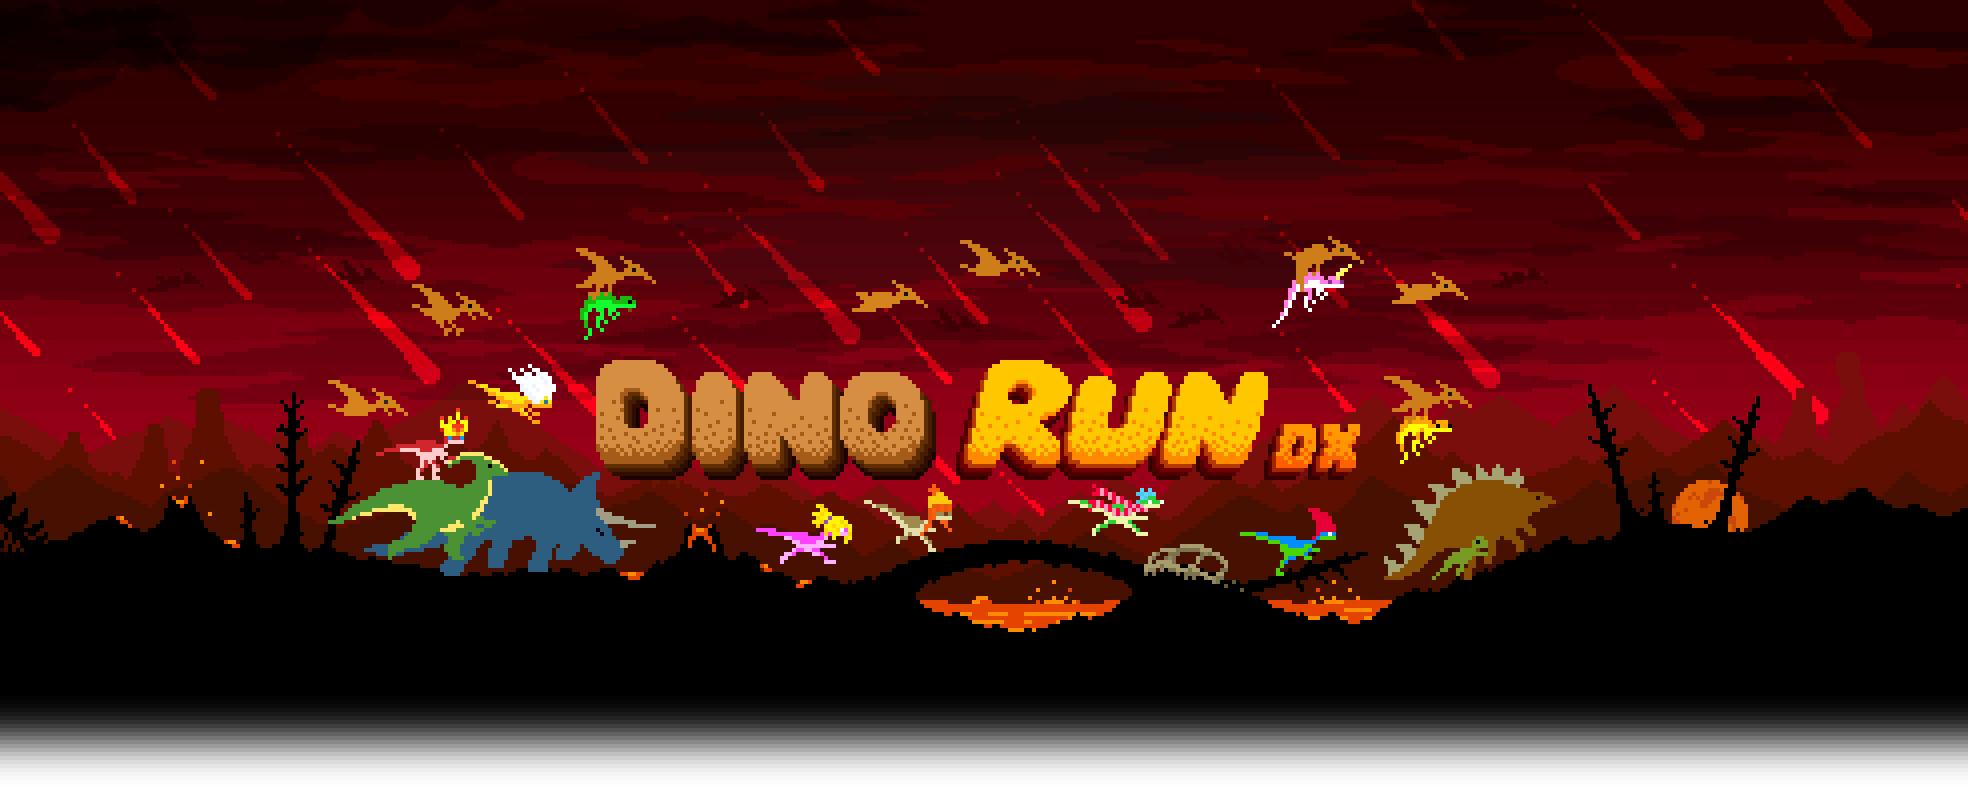 jaquette du jeu vidéo Dino Run